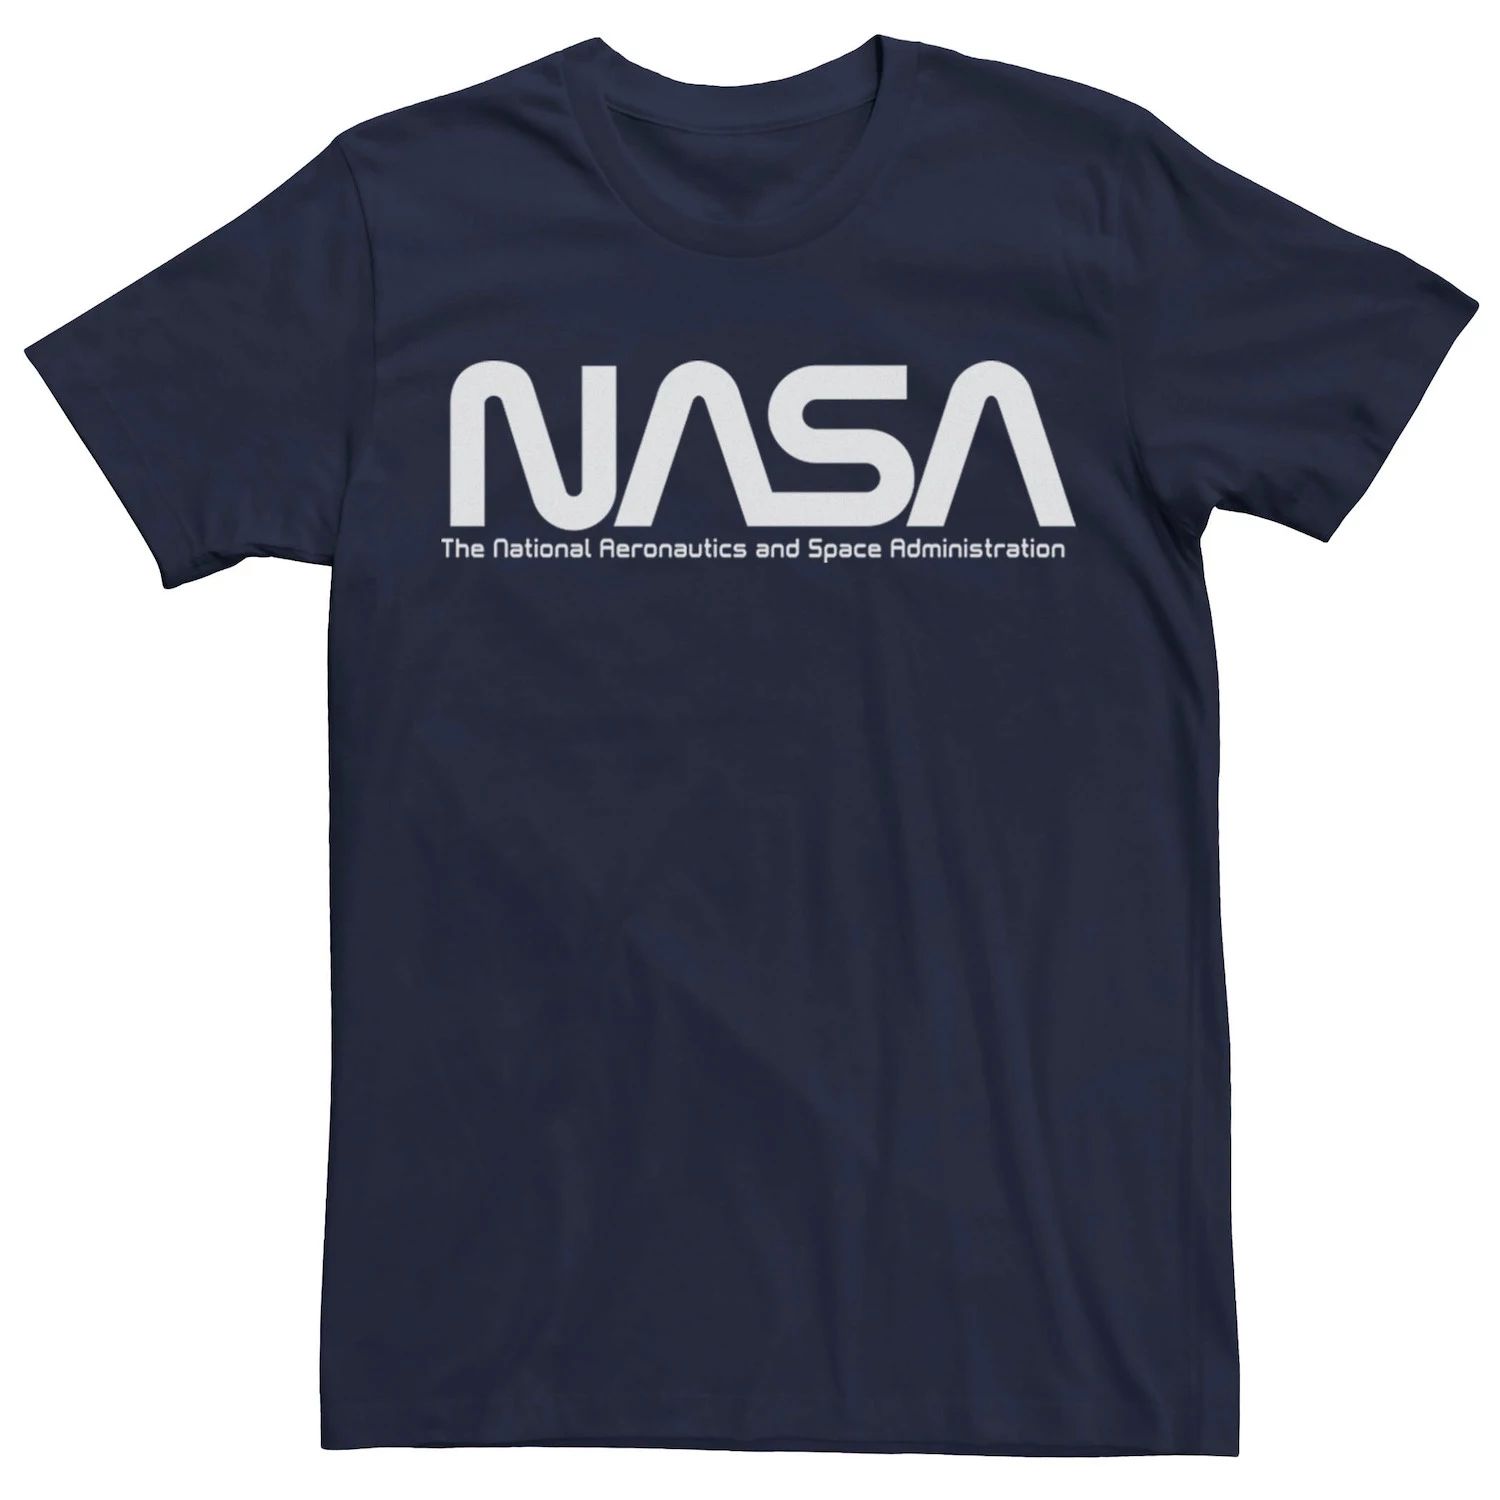 Мужская белая футболка с простым логотипом NASA Licensed Character